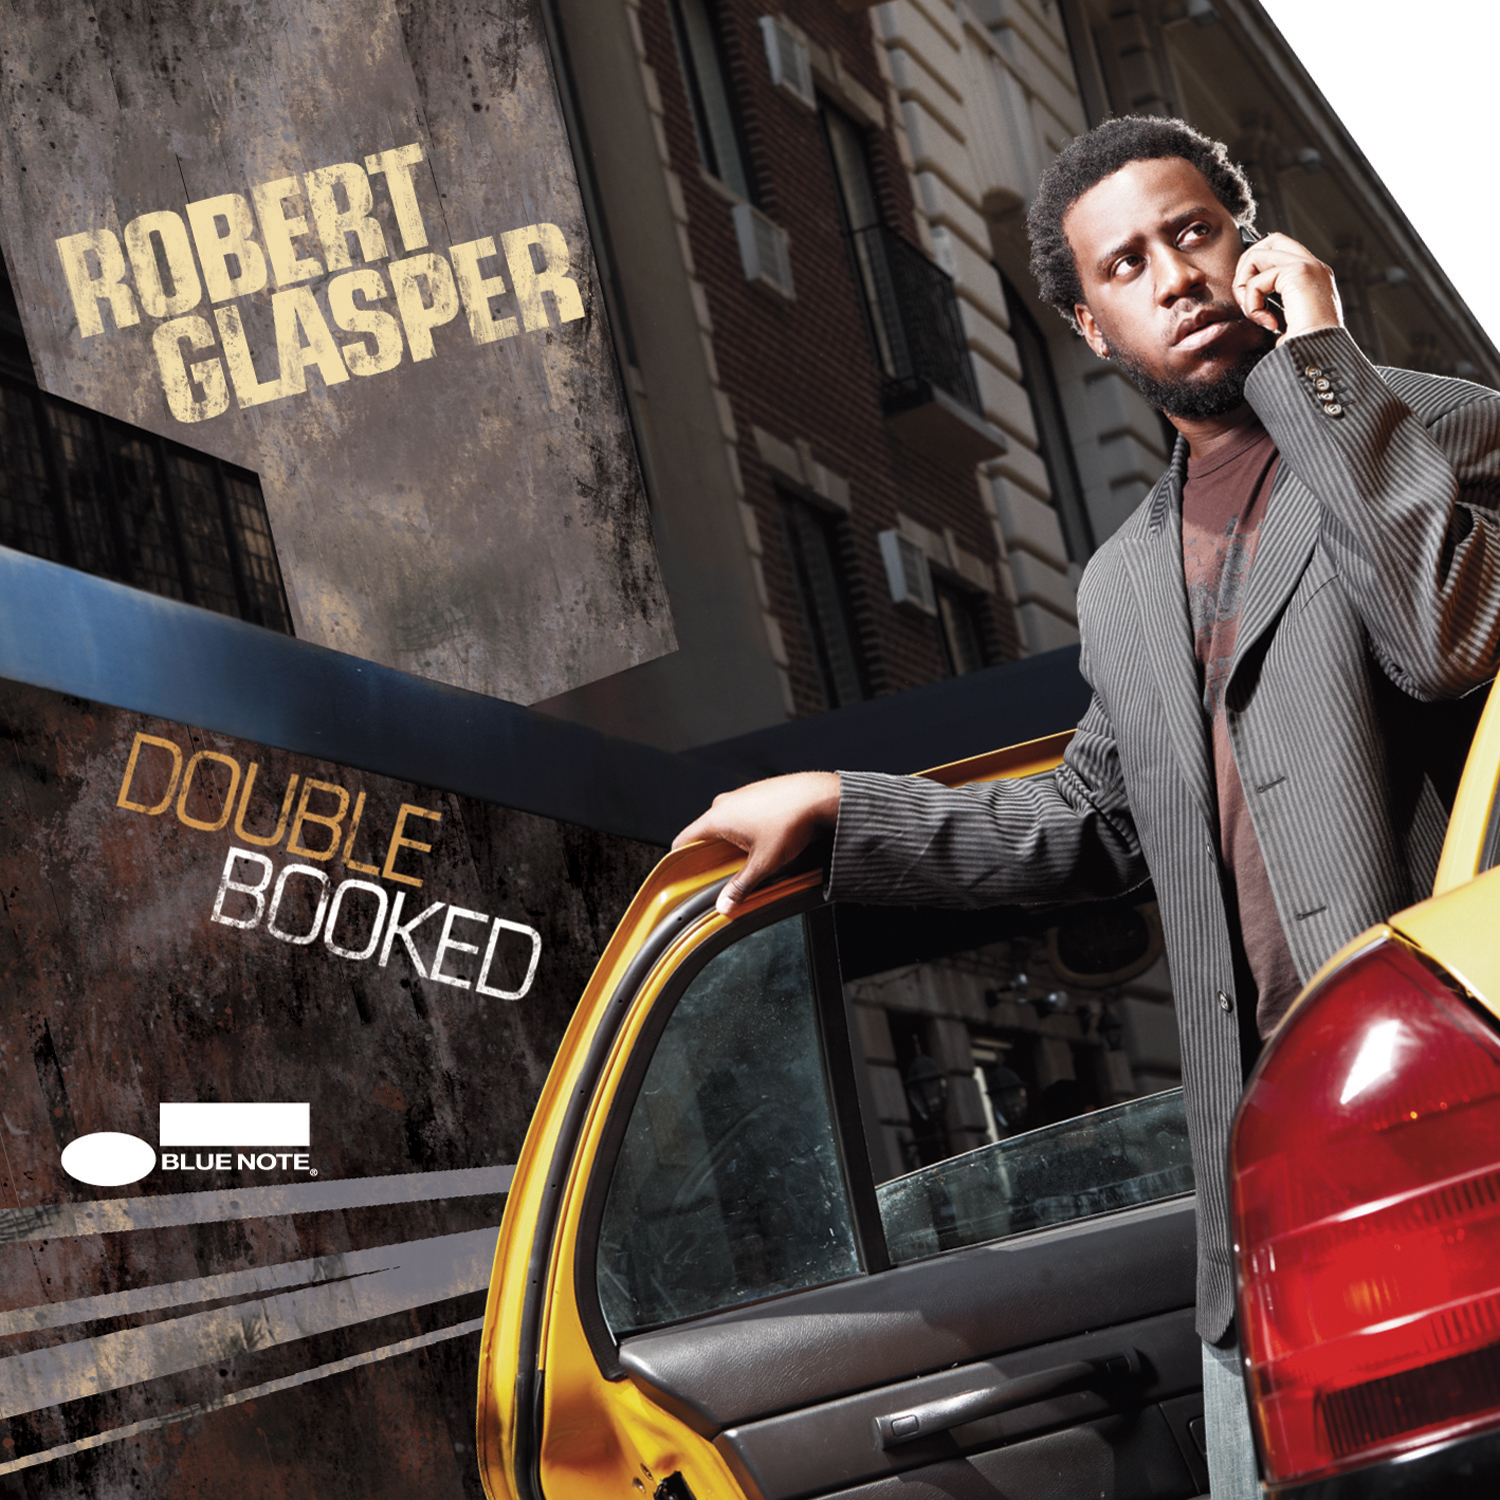 Robert Glasper, Double Booked mp3.